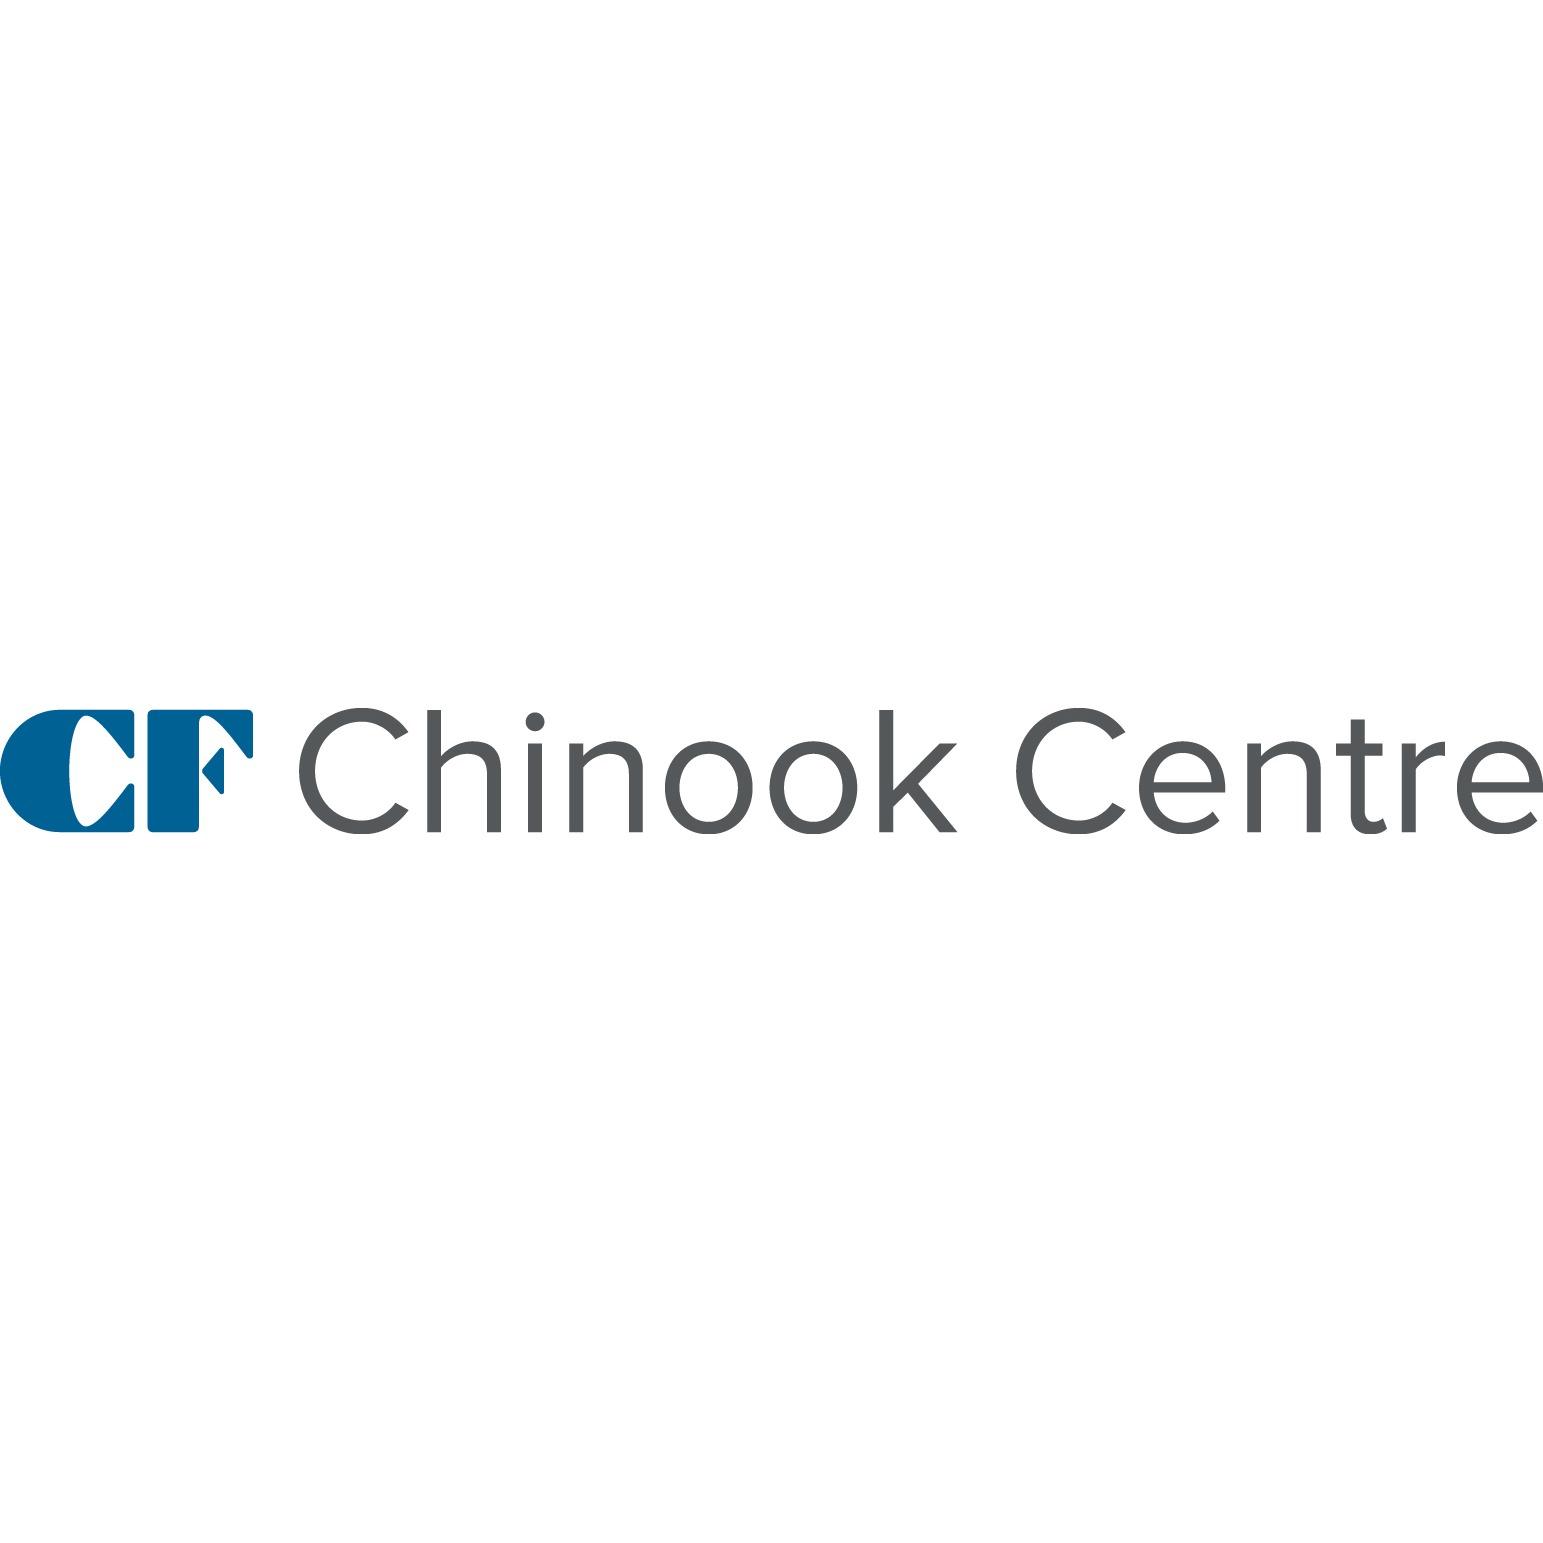 CF Chinook Centre, 6455 MacLeod Trail South, Calgary, AB, Shopping